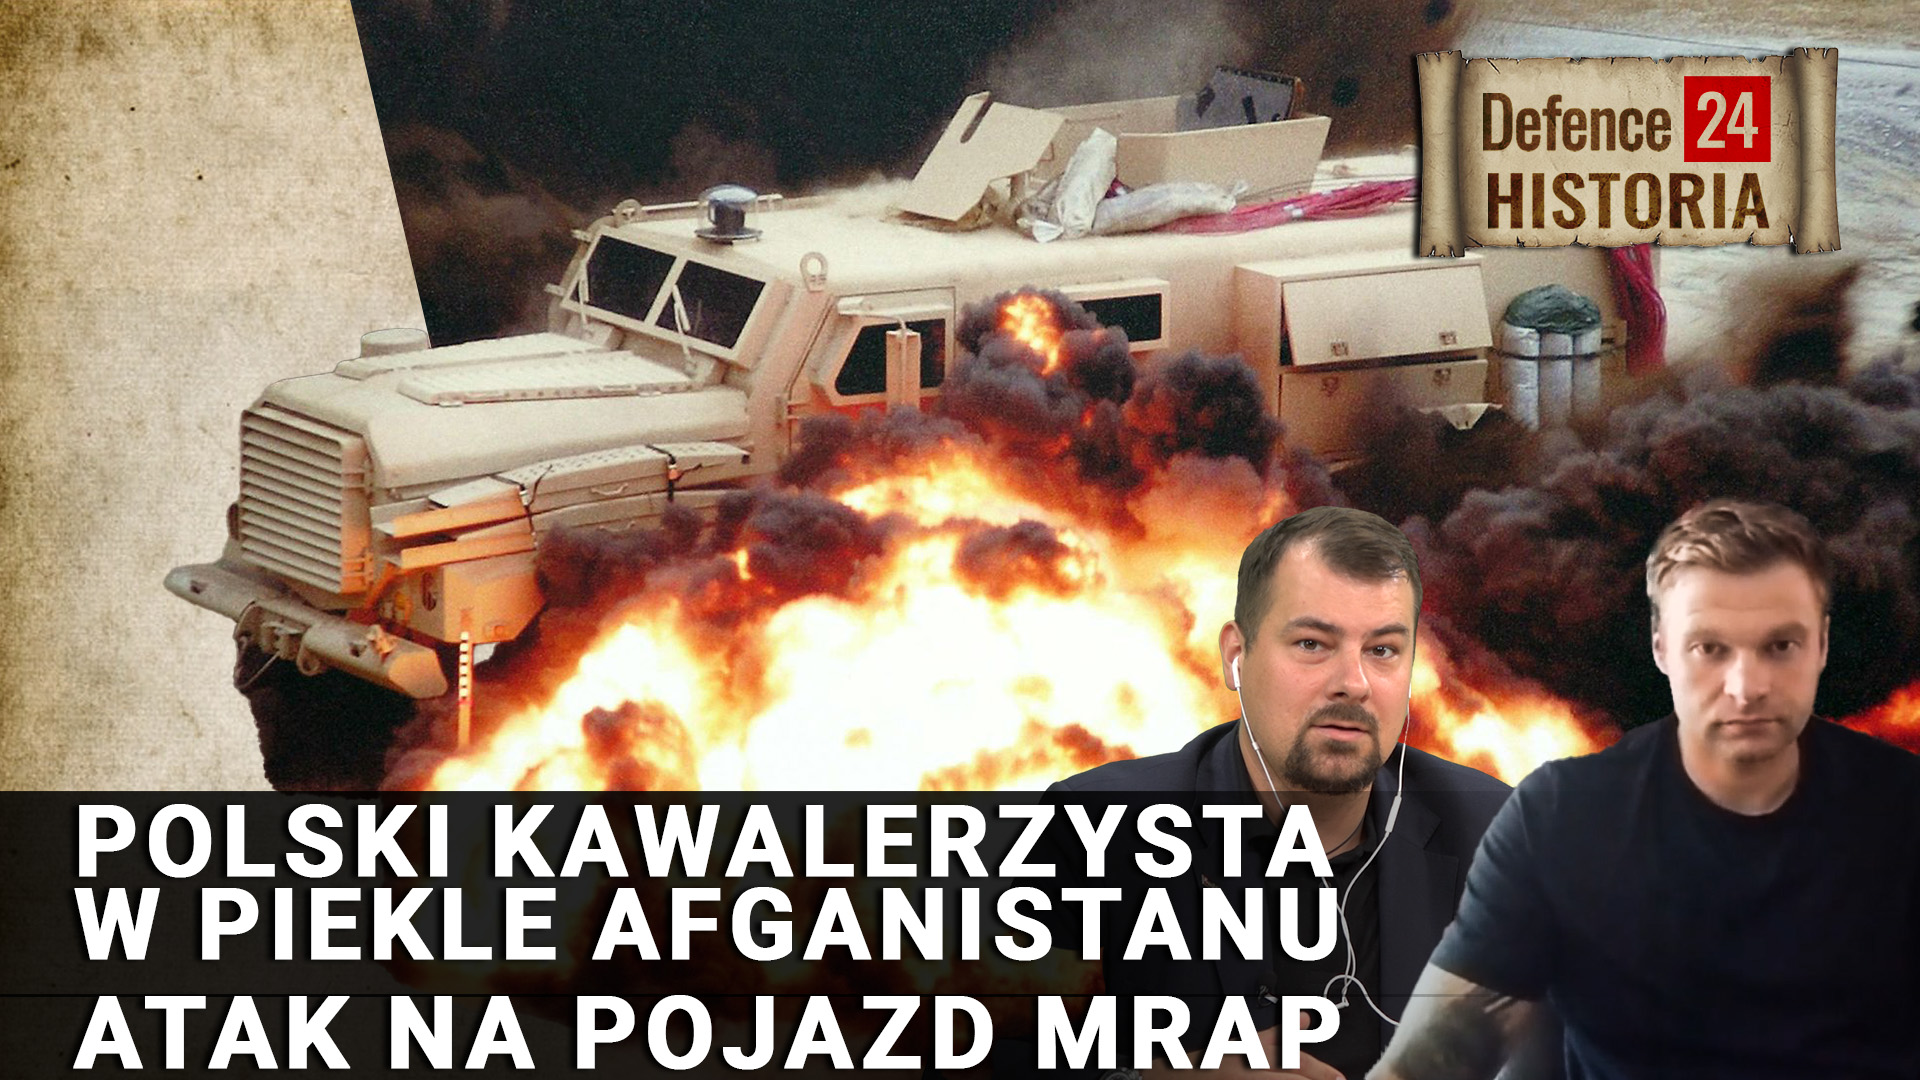 Polski kawalerzysta w piekle Afganistanu. Atak na pojazd MRAP [Defence24 TV]